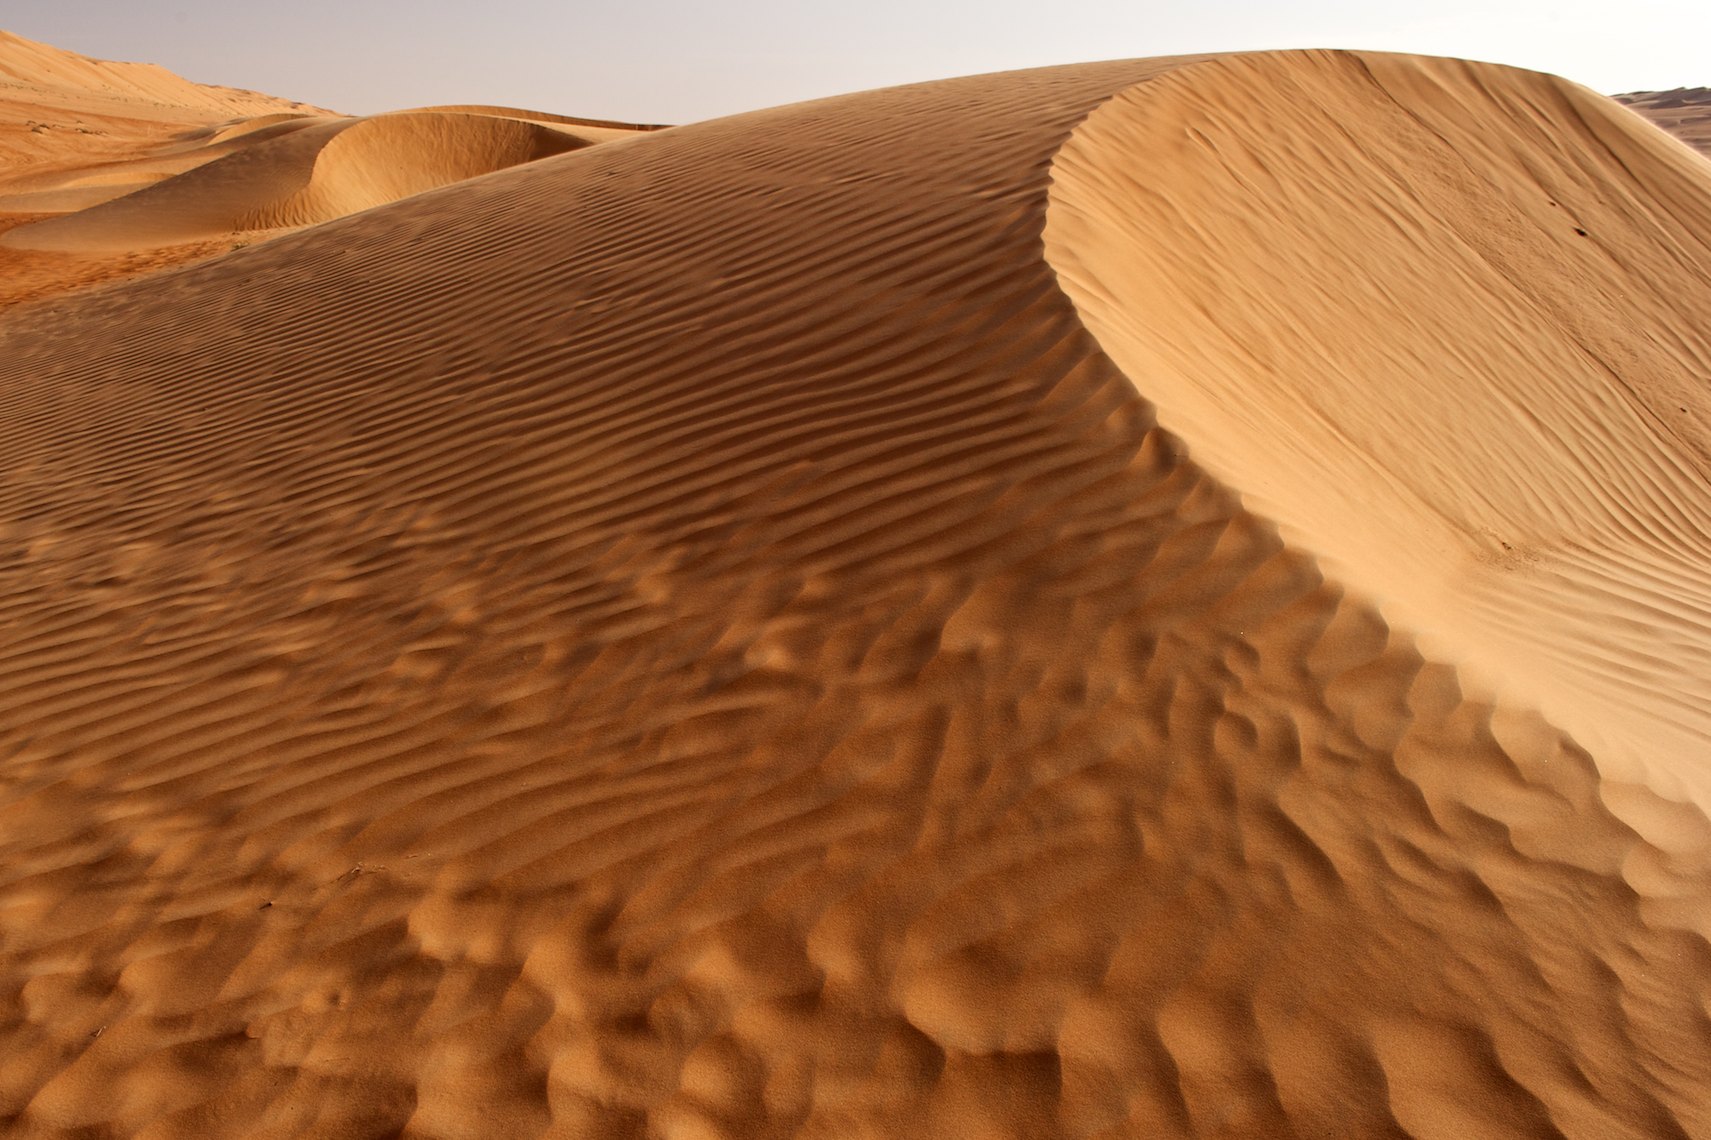 Oman Wahiba Sands dunes